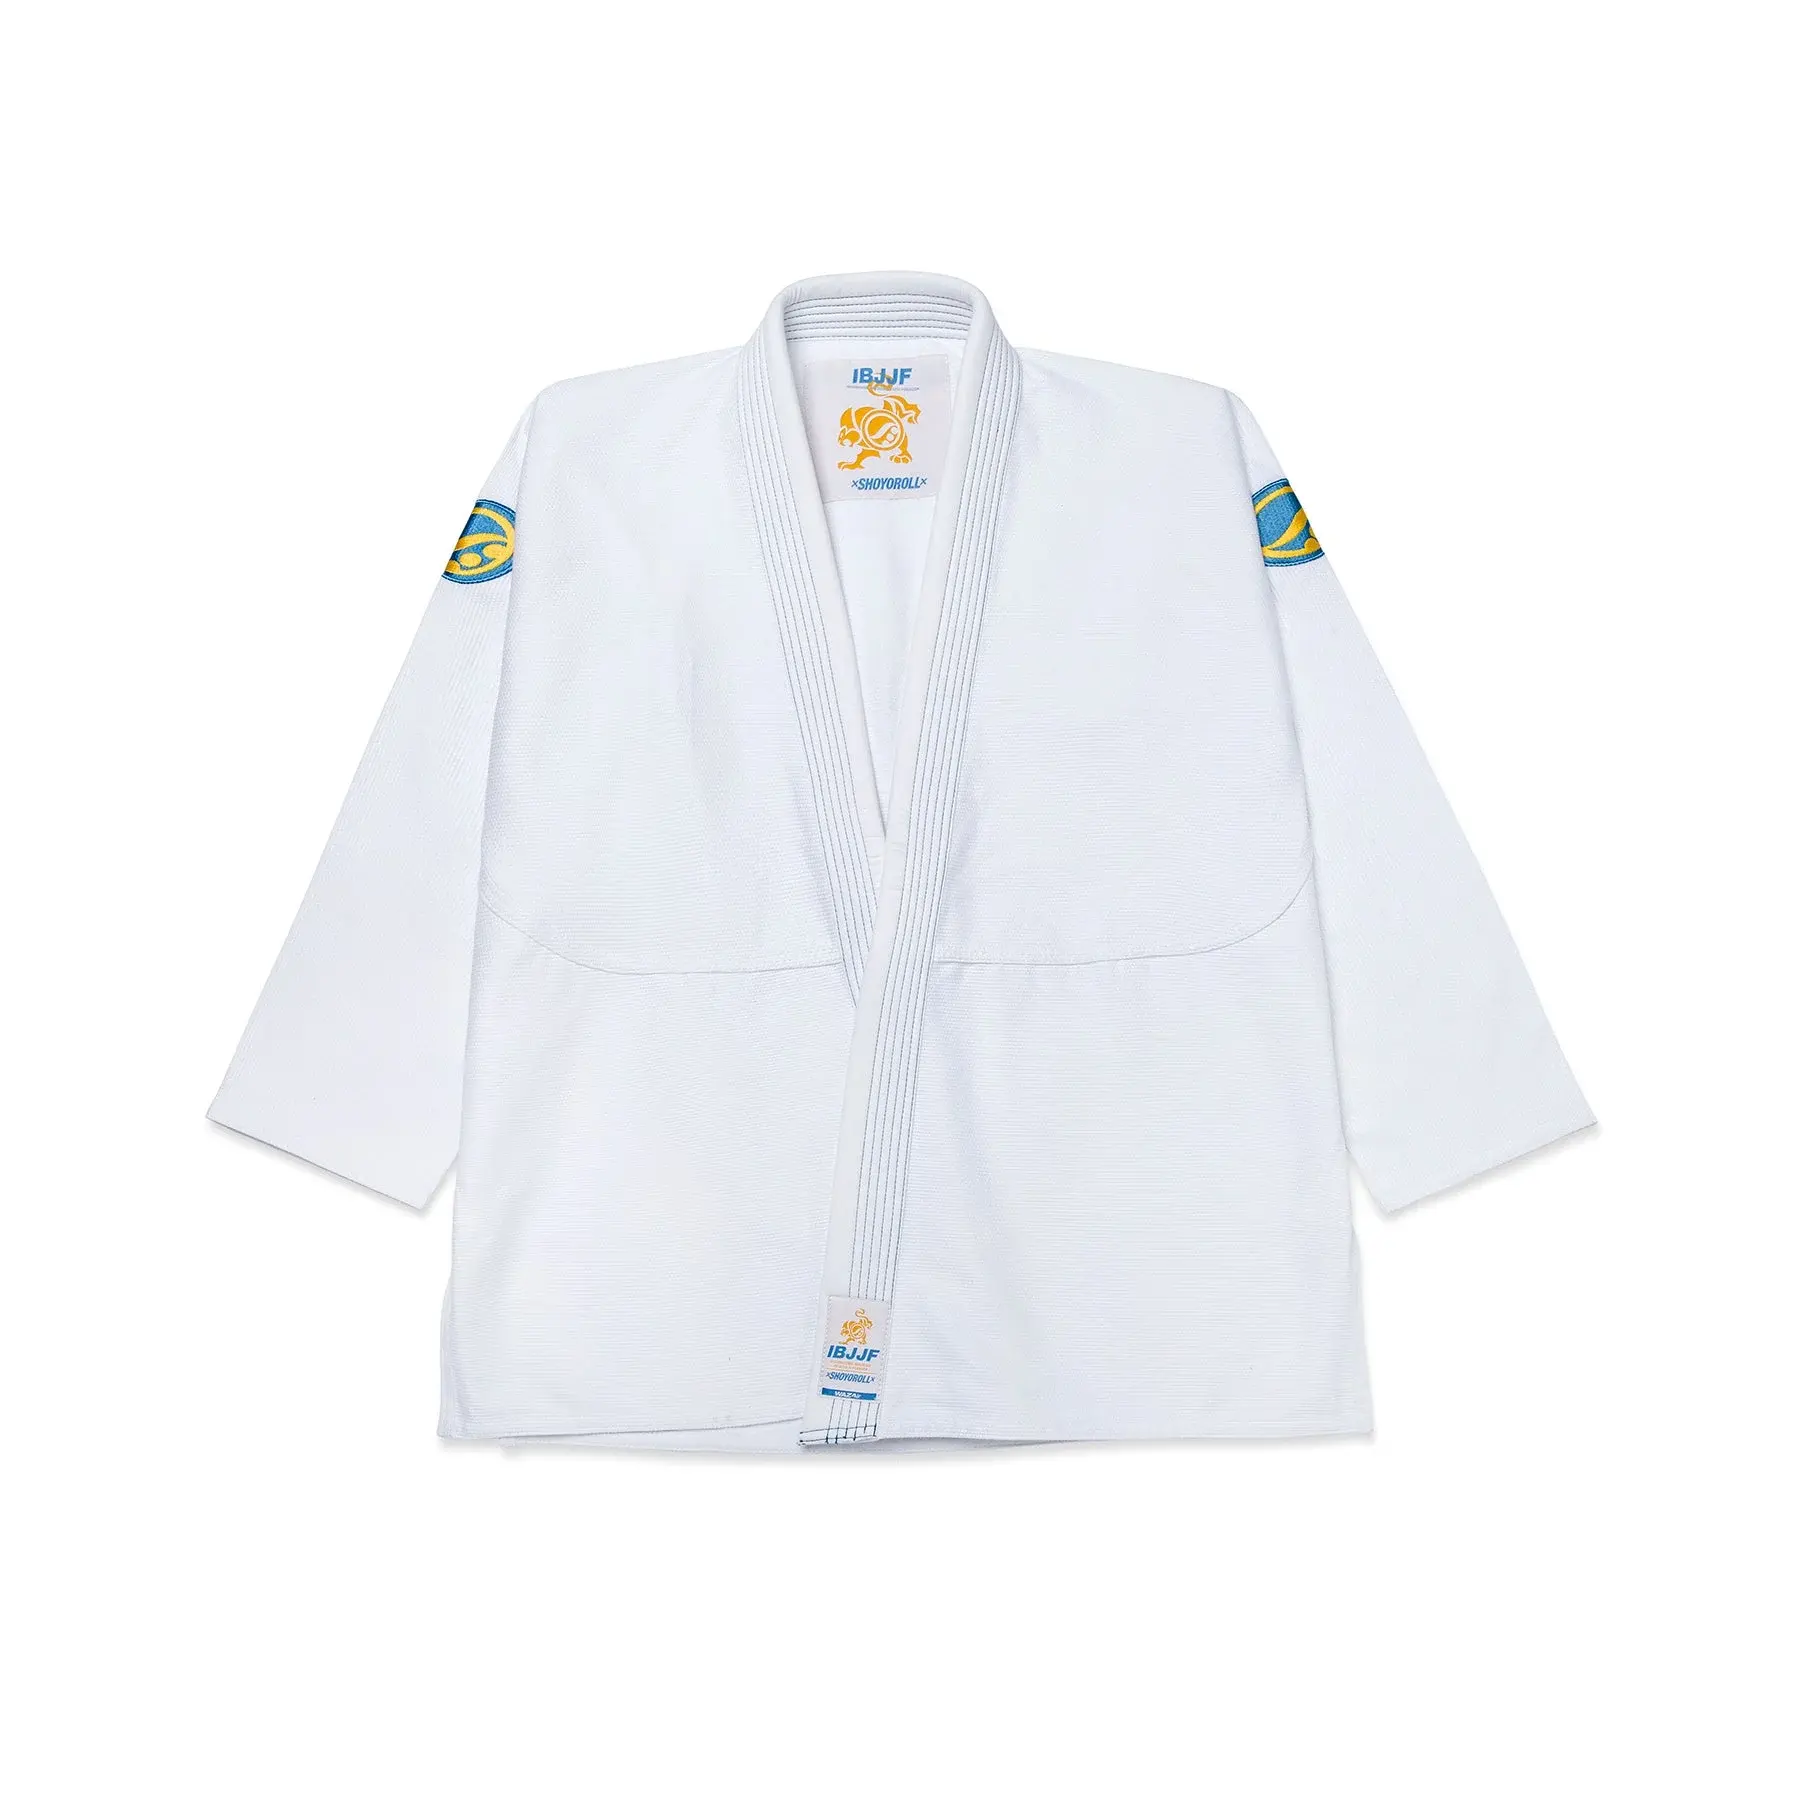 Professional Training Fight Mix Martial Arts Best Selling Gis Kimono Pearl Weave Jiu Jitsu Uniform Karate Suit Plus Size